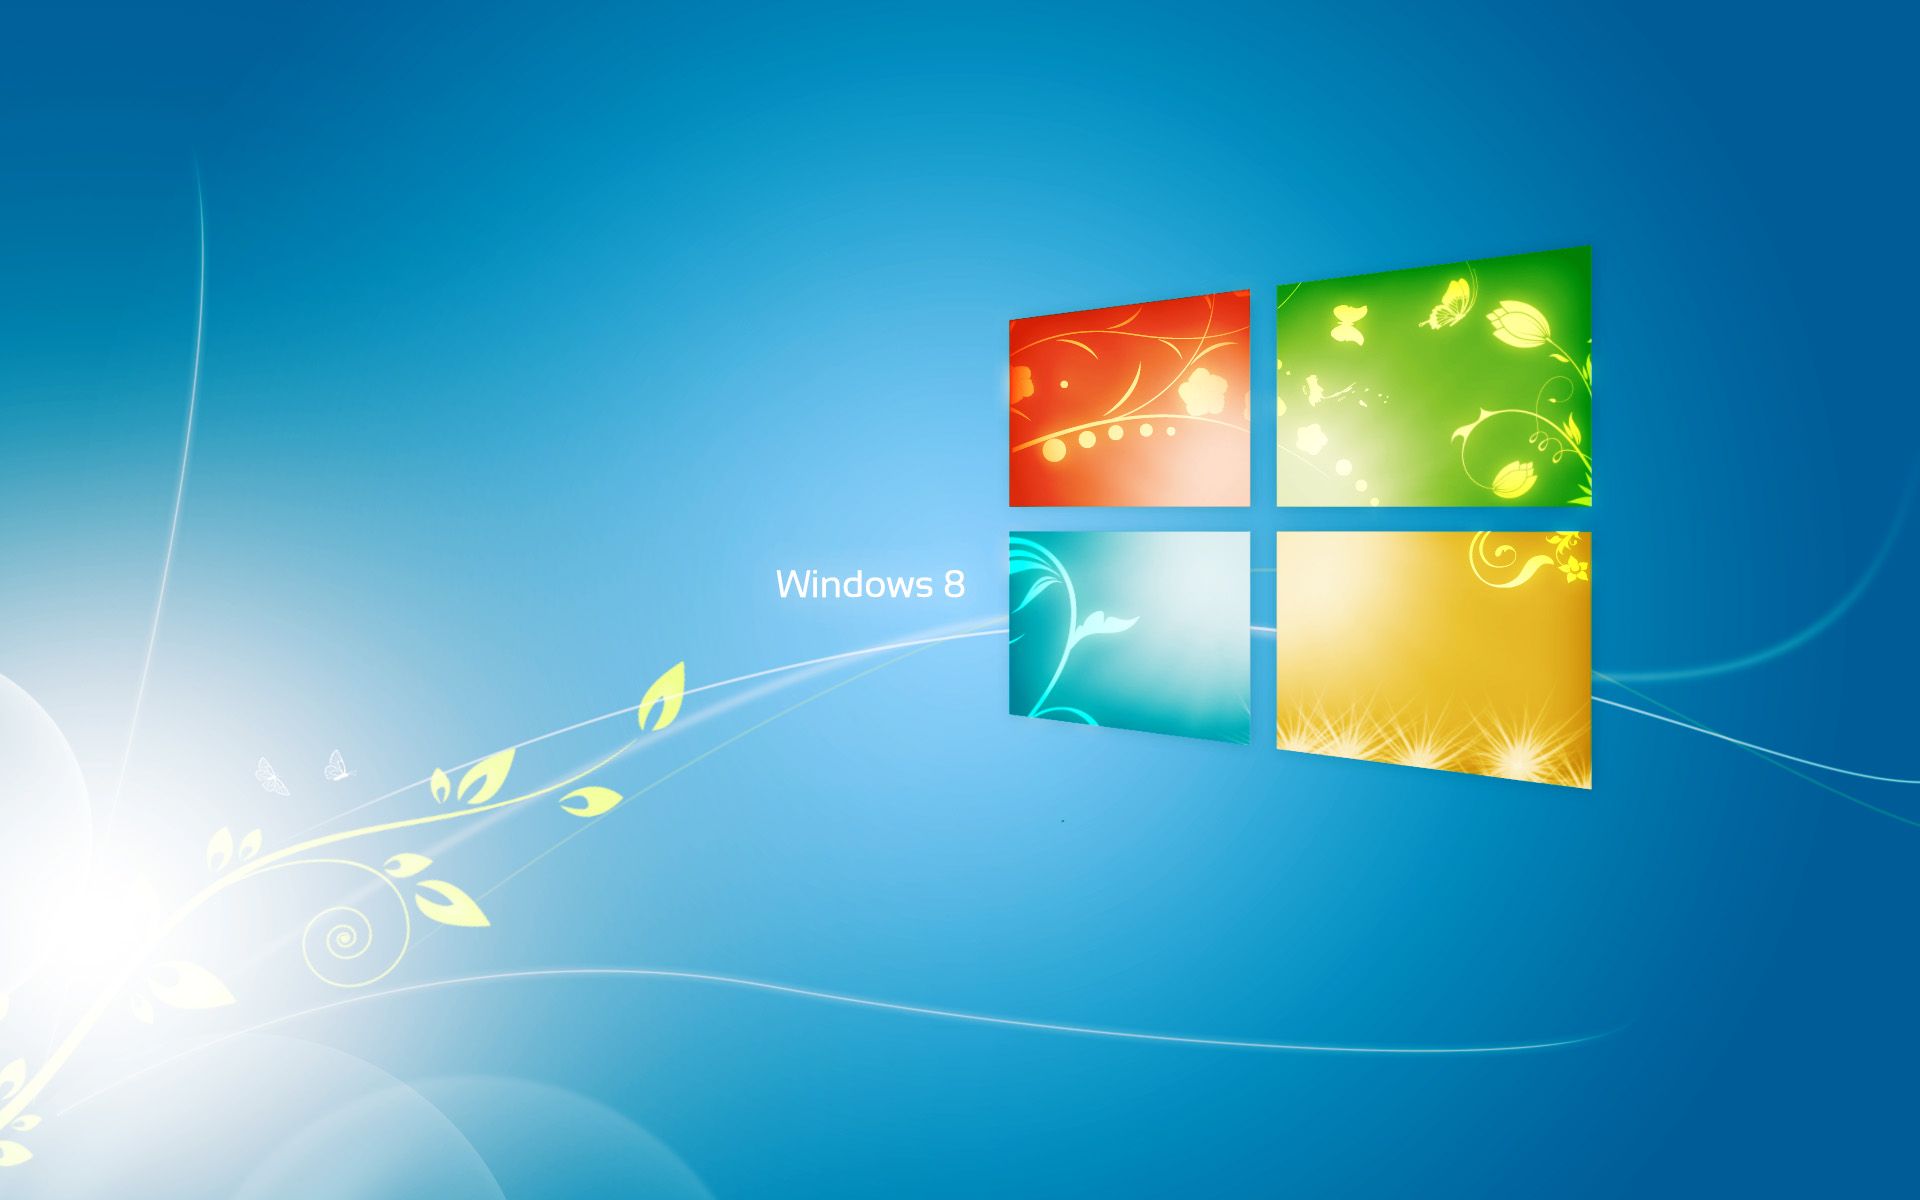 Windows 8 Wallpapers for Desktop 1920x1200px #667583